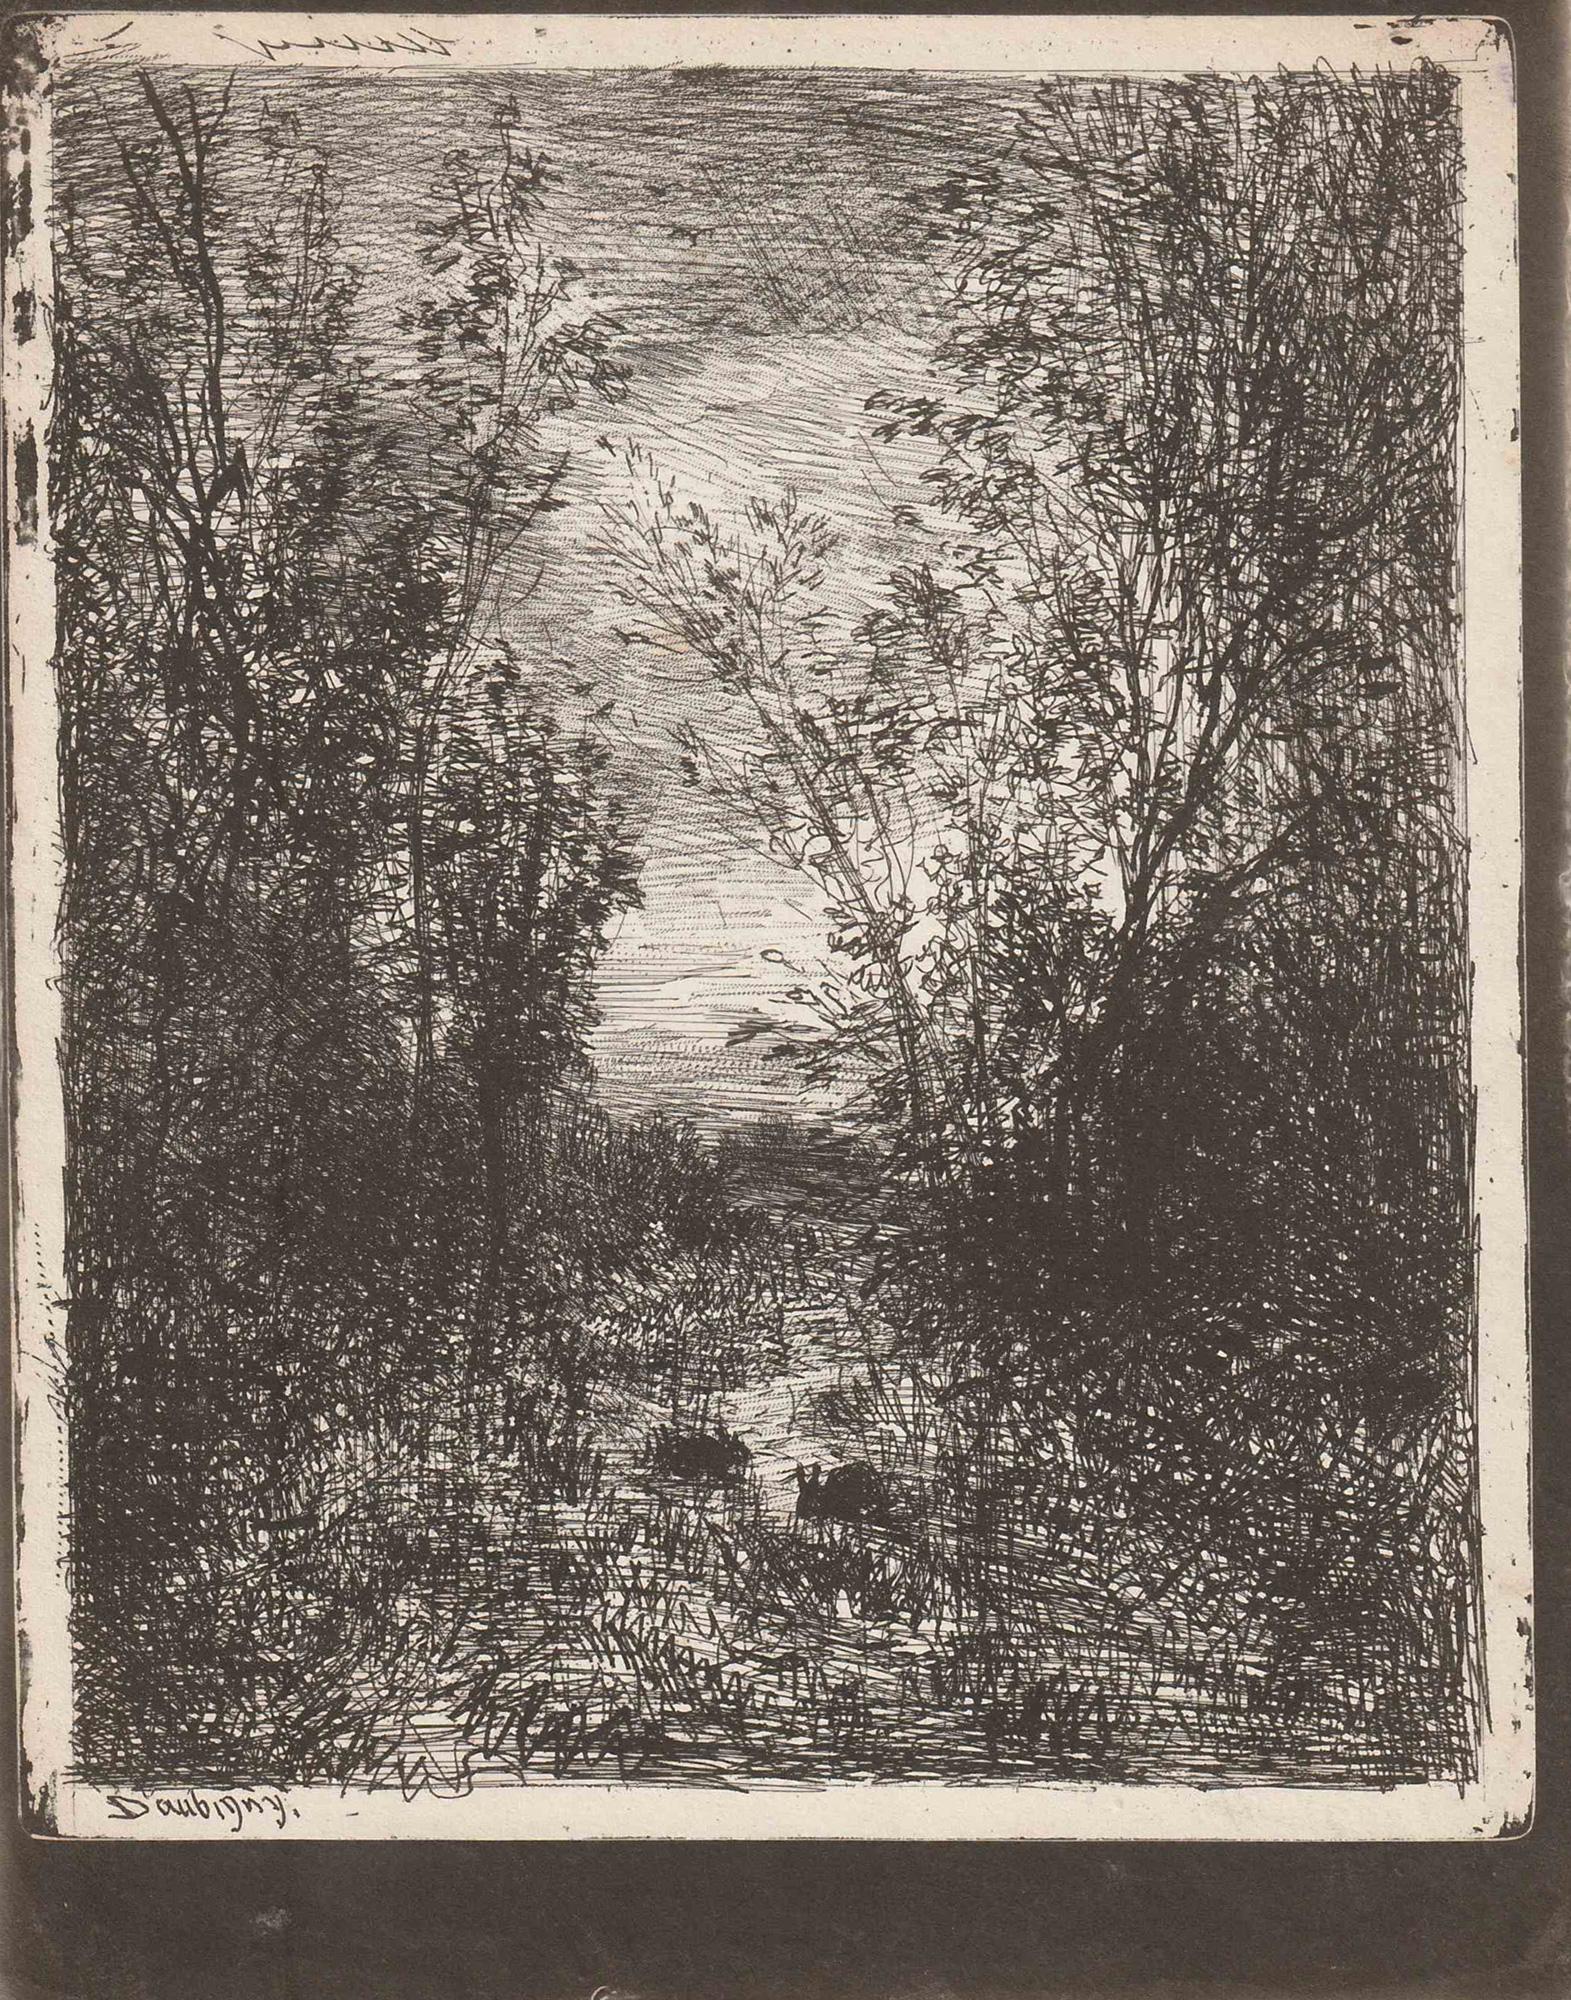 Le Ruisseau Dans La Clairière (The Brook in the Clearing)